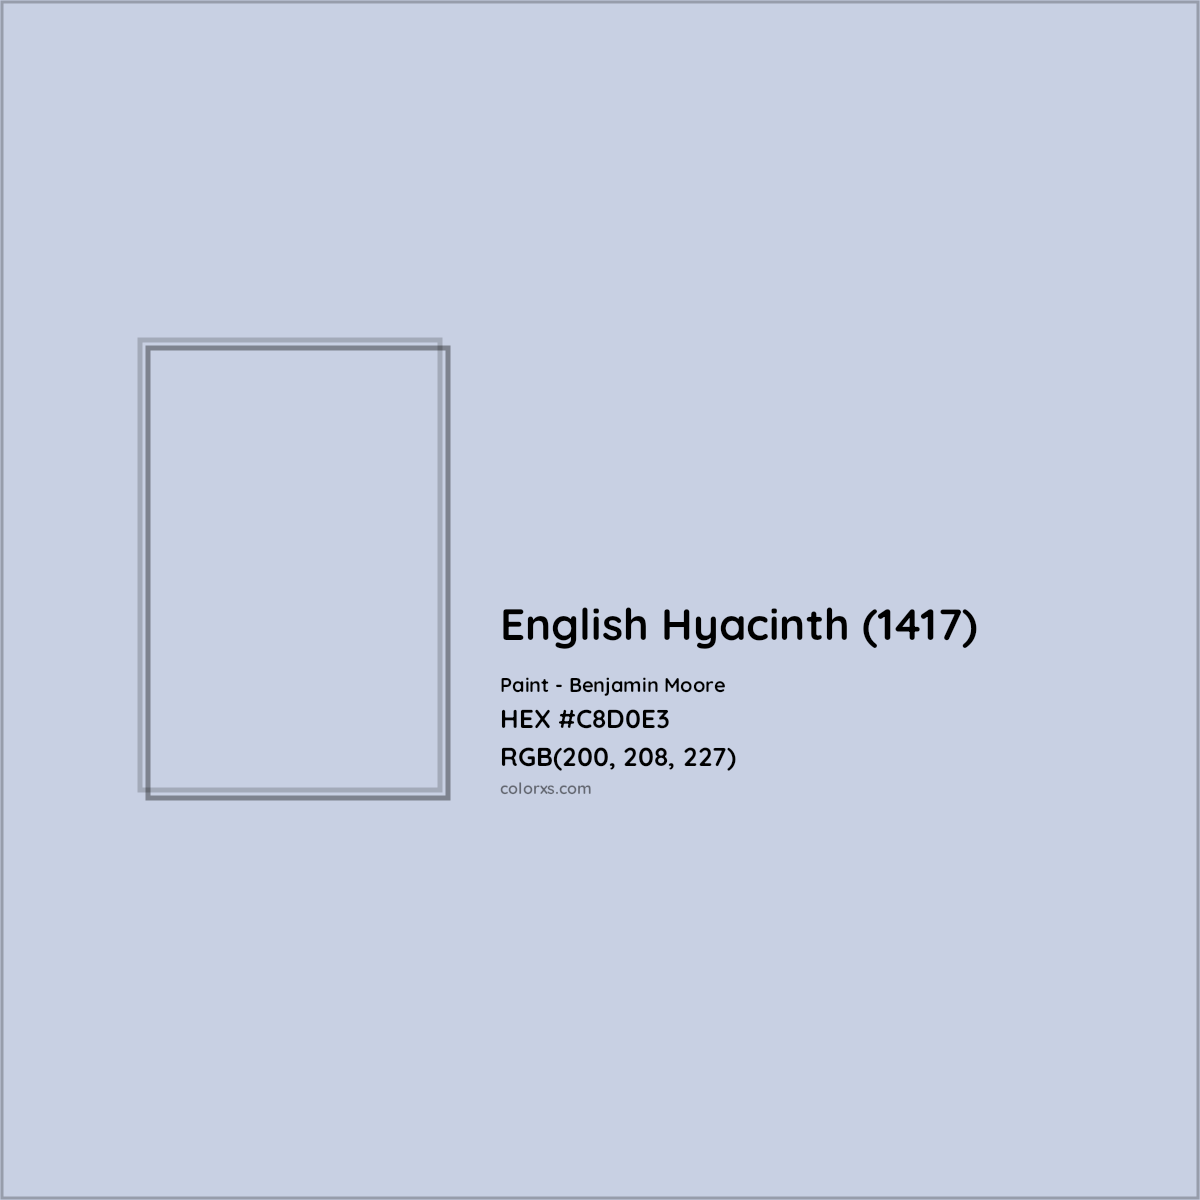 HEX #C8D0E3 English Hyacinth (1417) Paint Benjamin Moore - Color Code